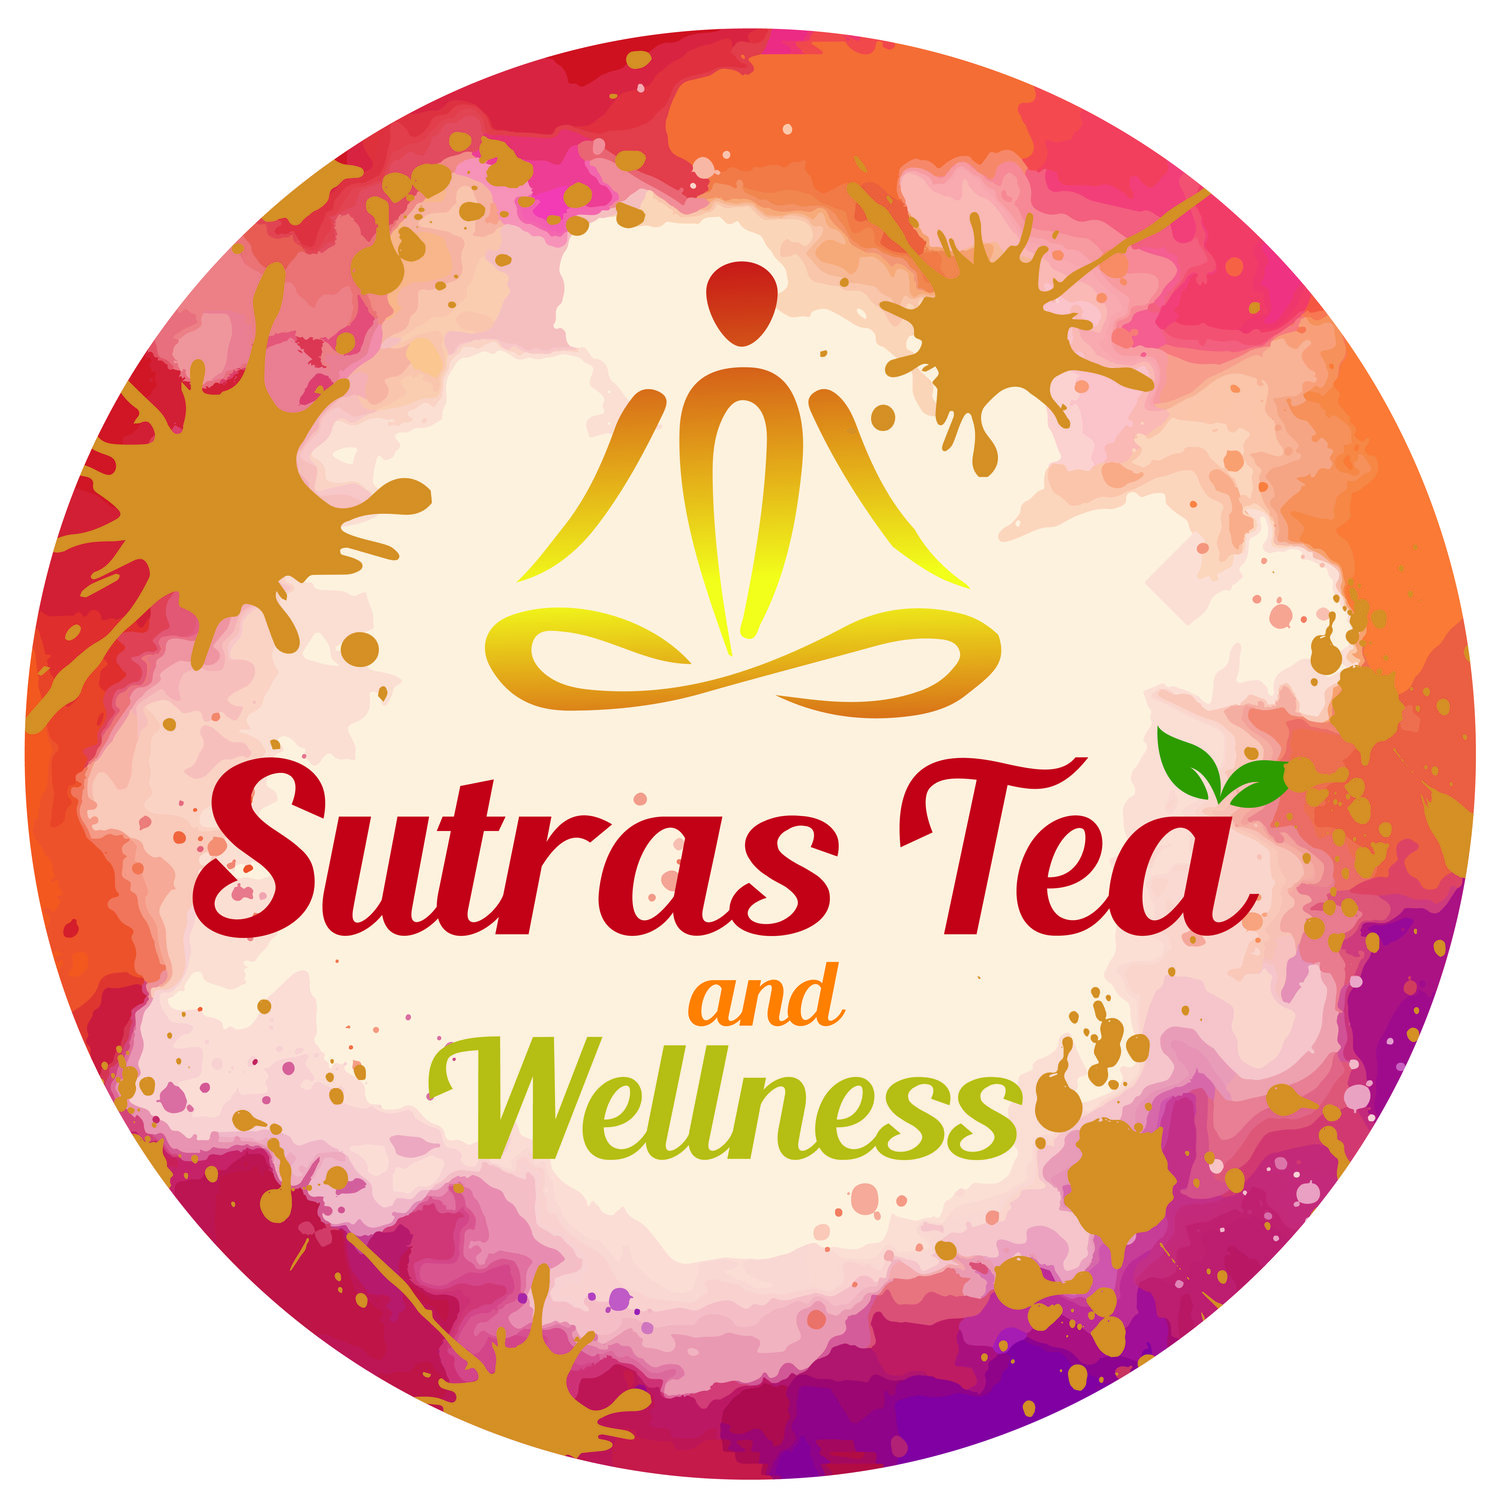 Sutras Tea and Wellness